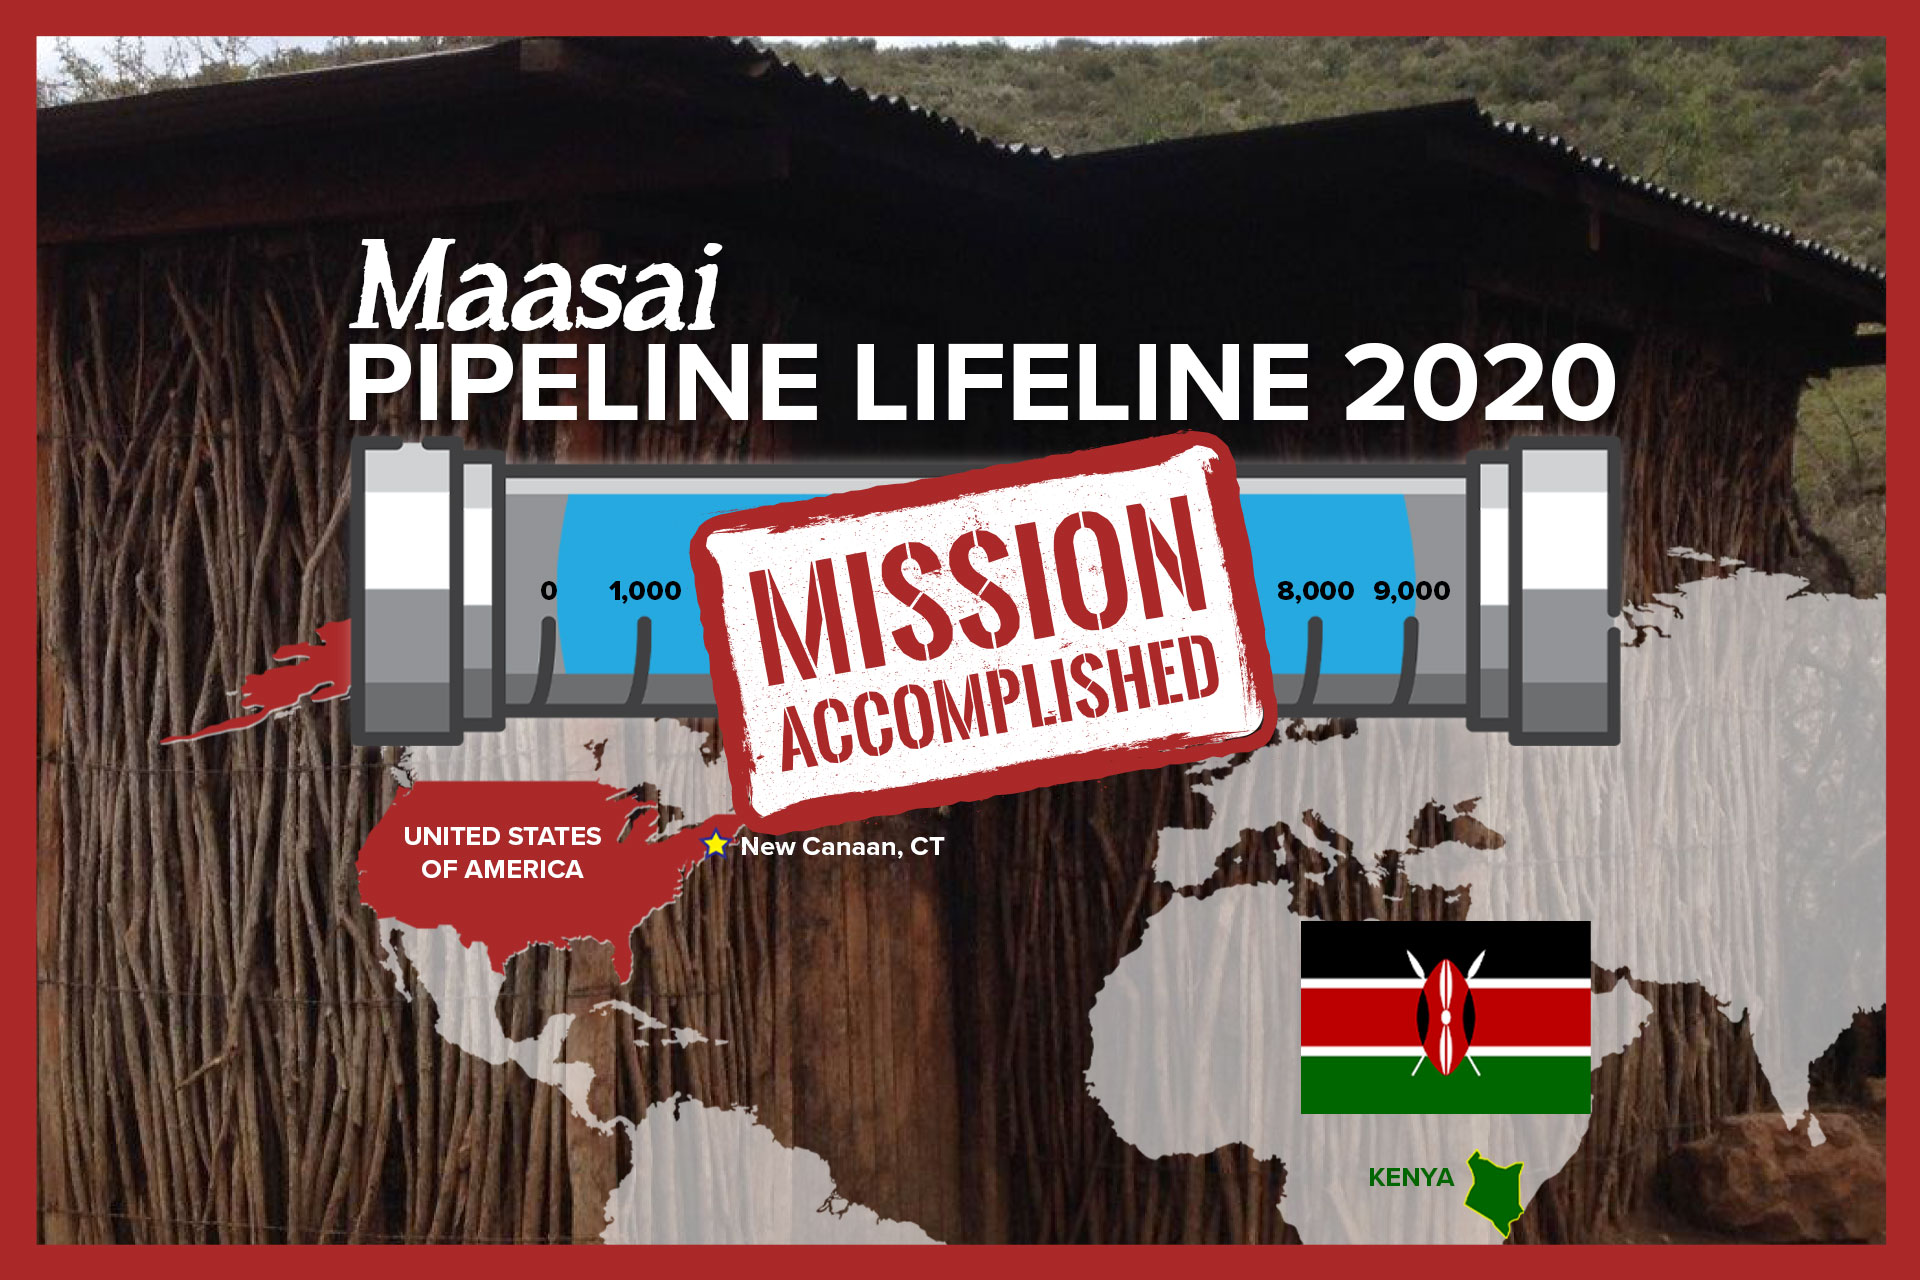 Maasai Pipeline Lifeline - Mission Accomplished